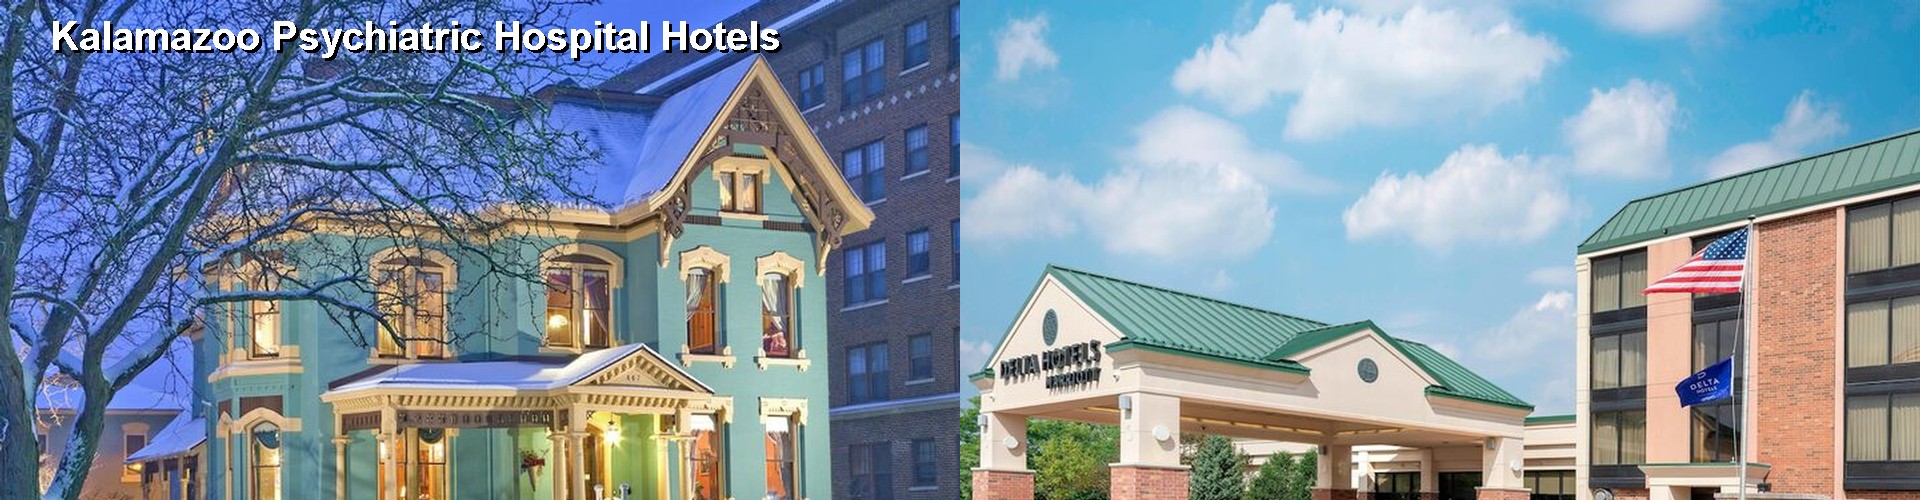 5 Best Hotels near Kalamazoo Psychiatric Hospital